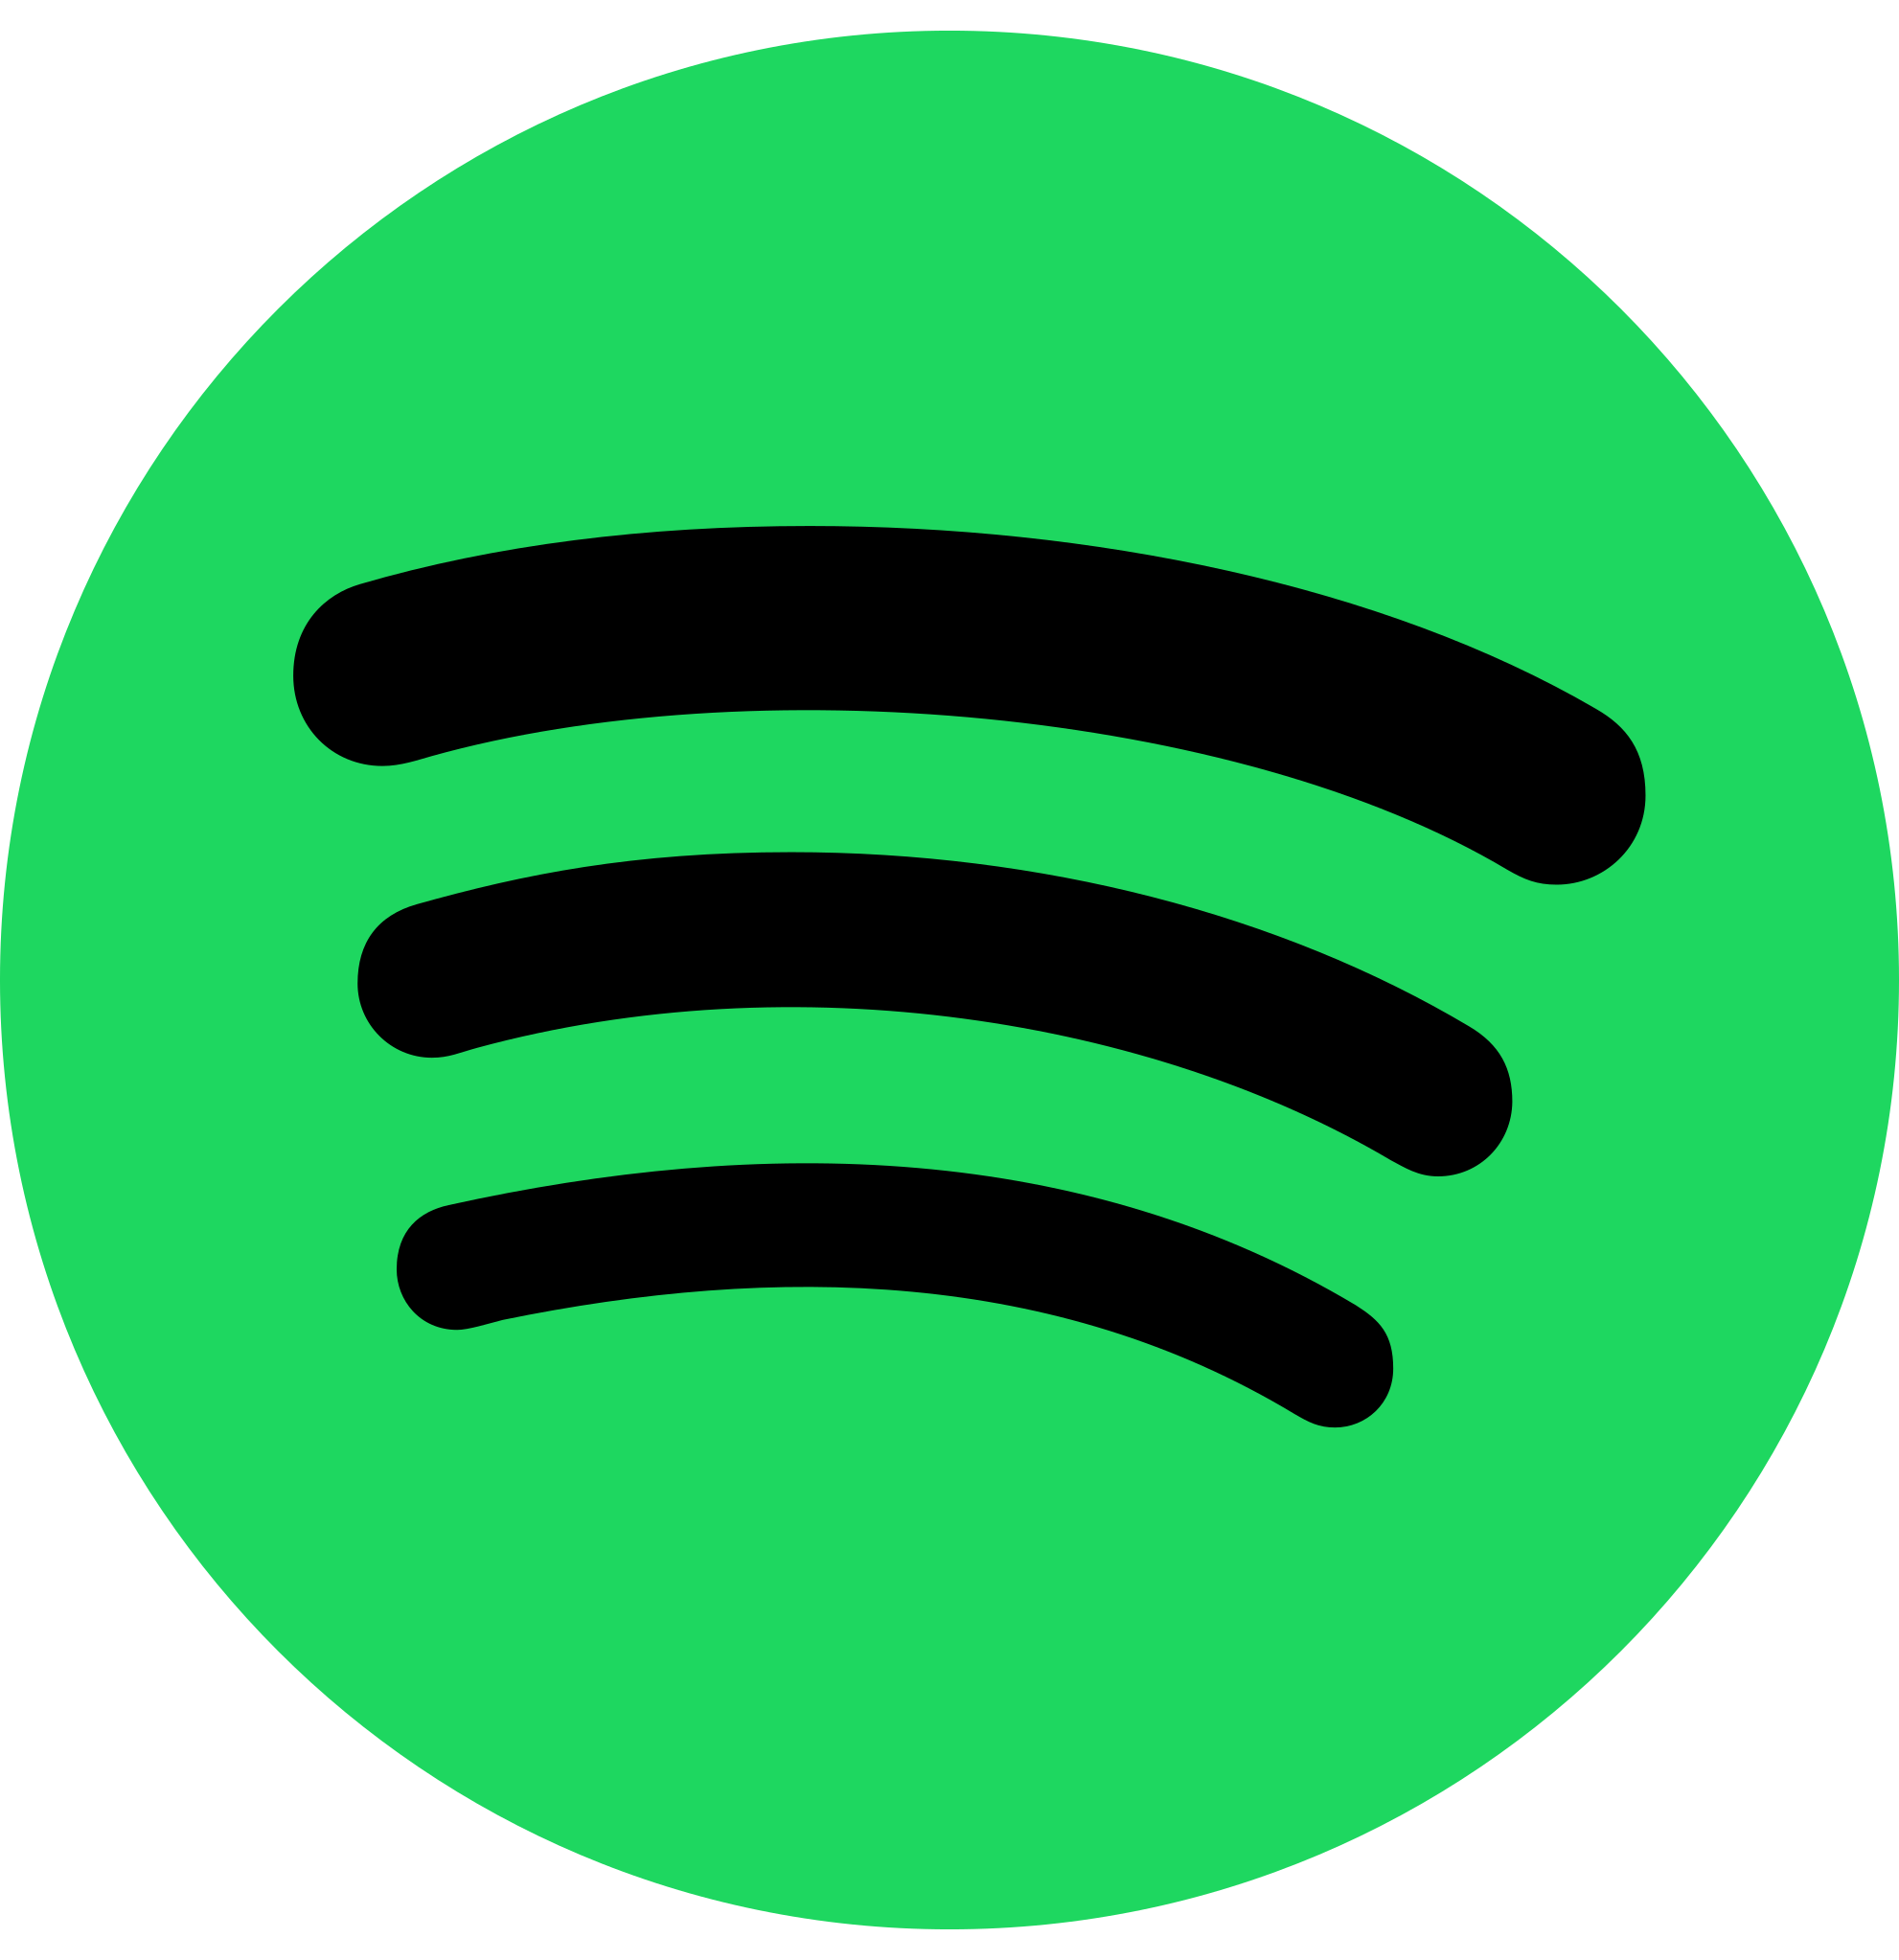 Spotify icon.svg